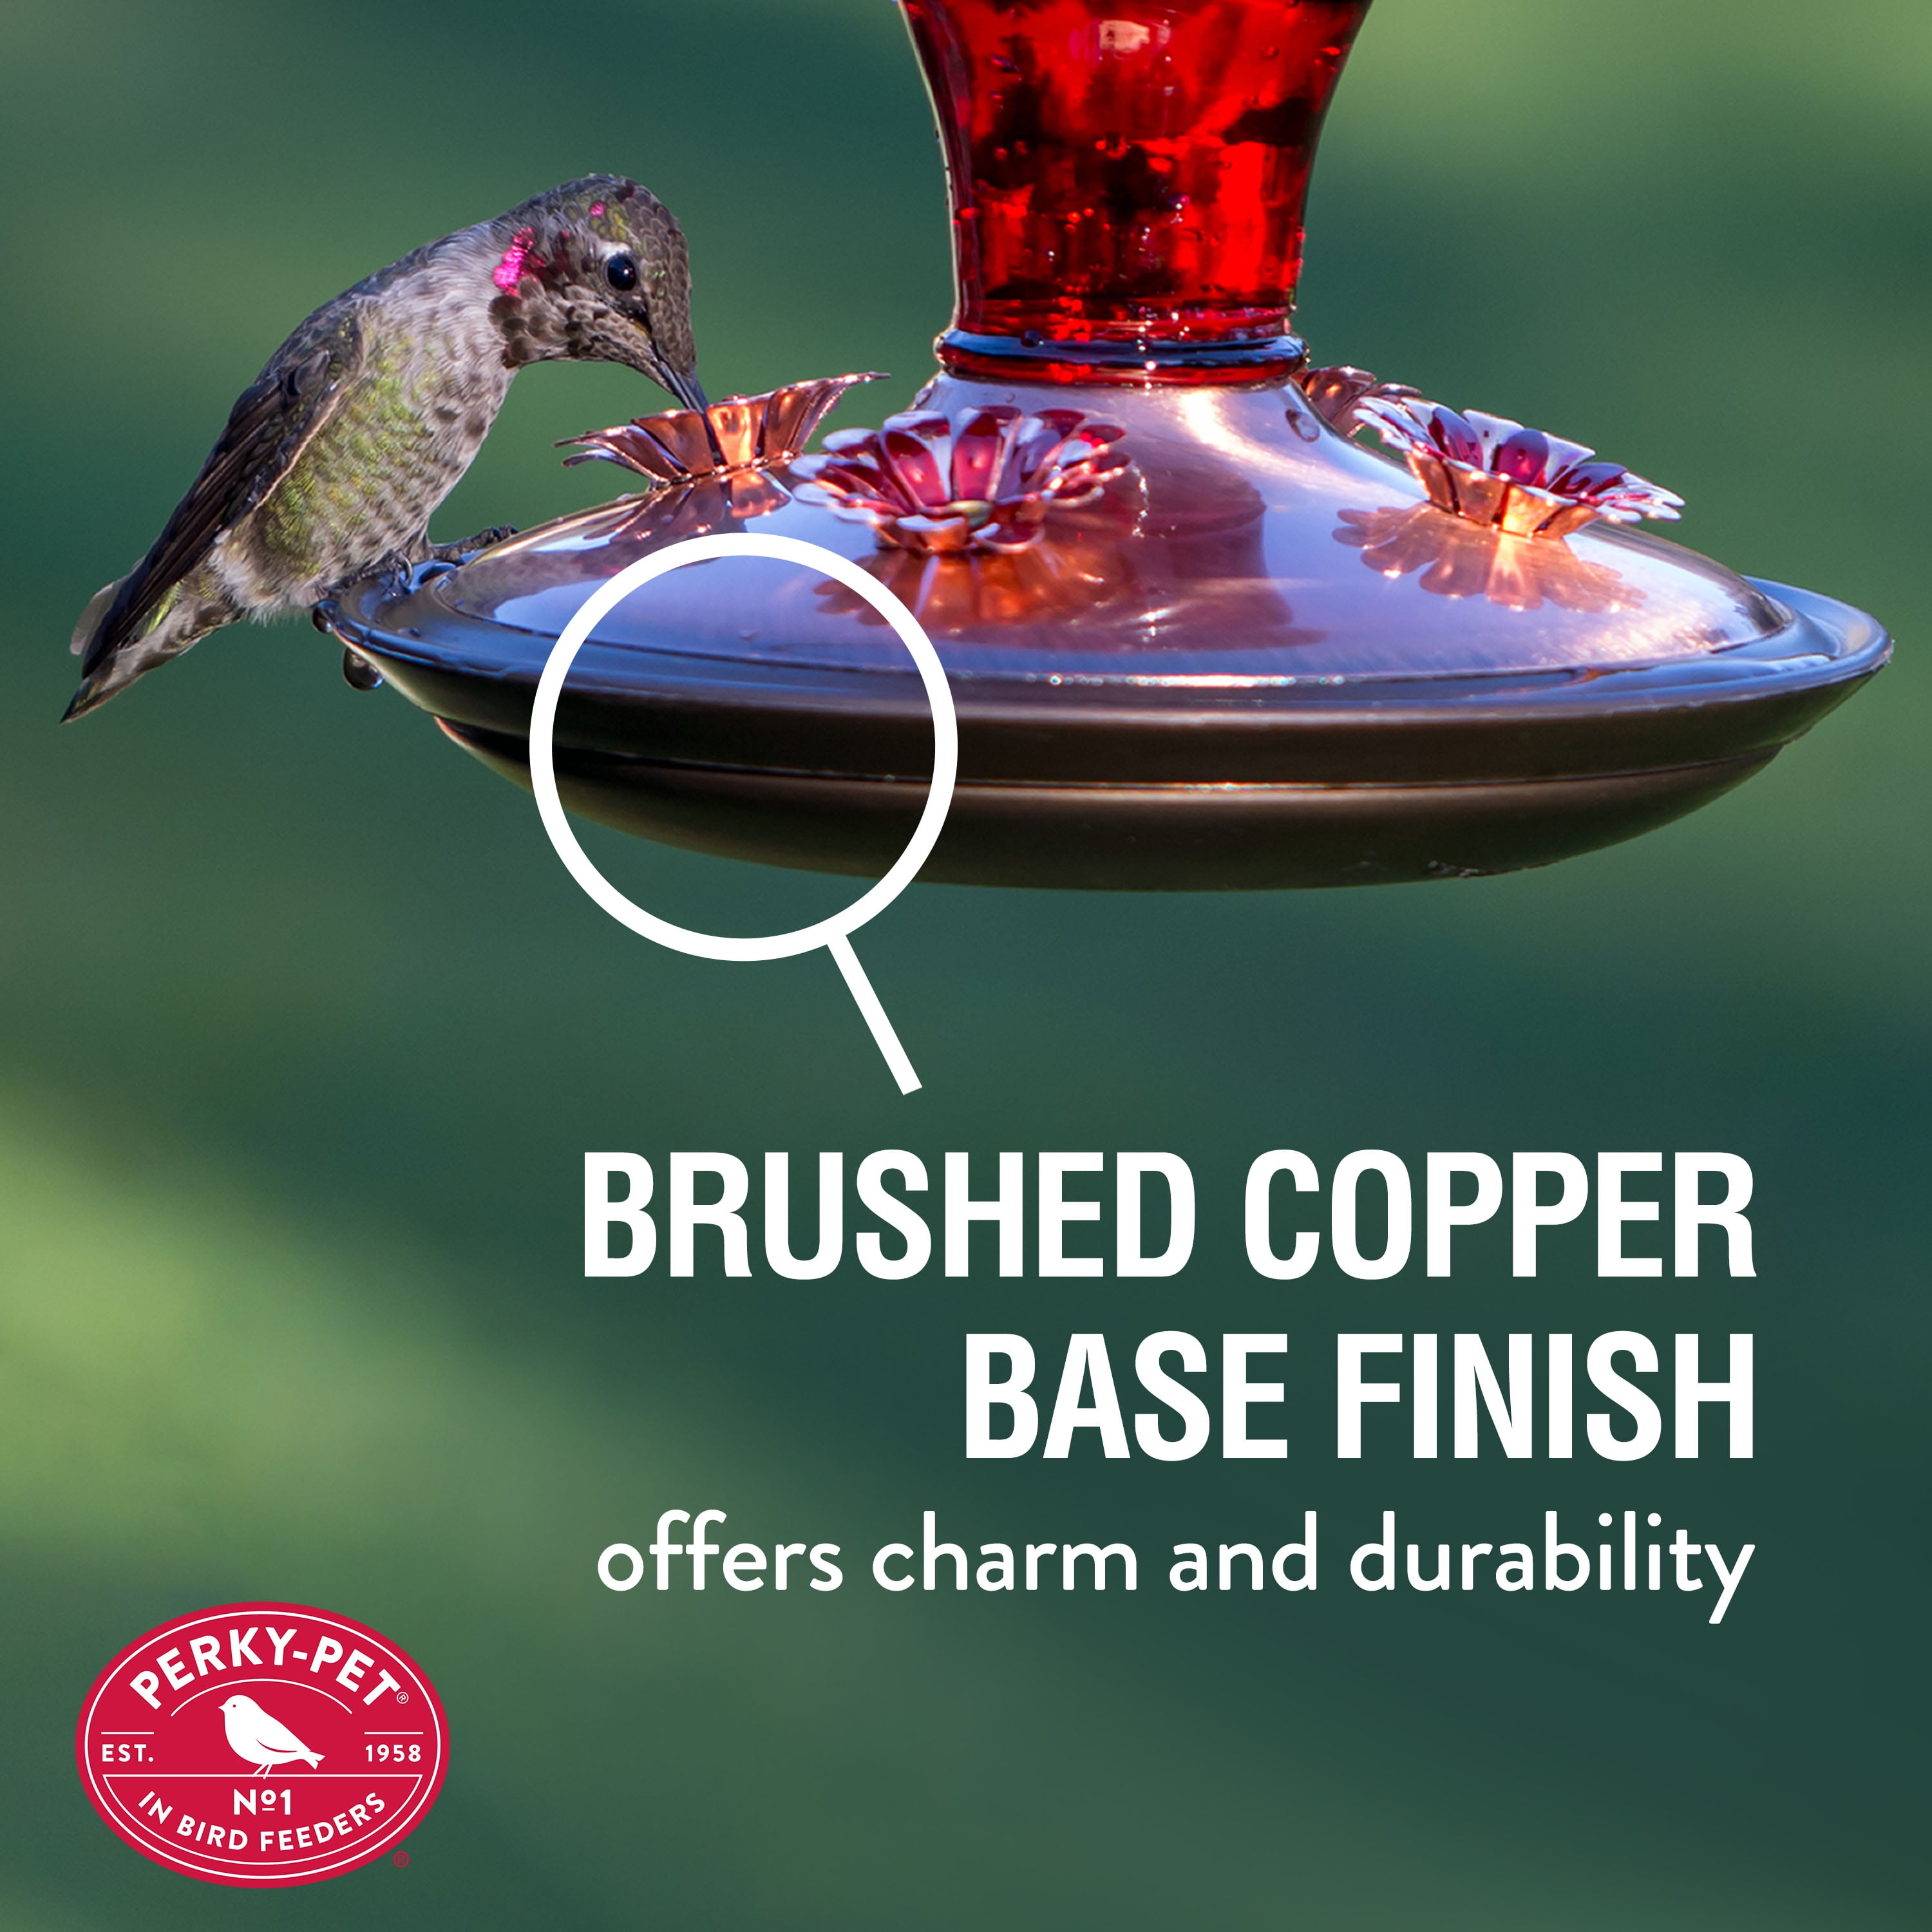 Garden Antique Red Glass Hummingbird Feeder Nectar Bird Supply Perky-Pet 24 oz 